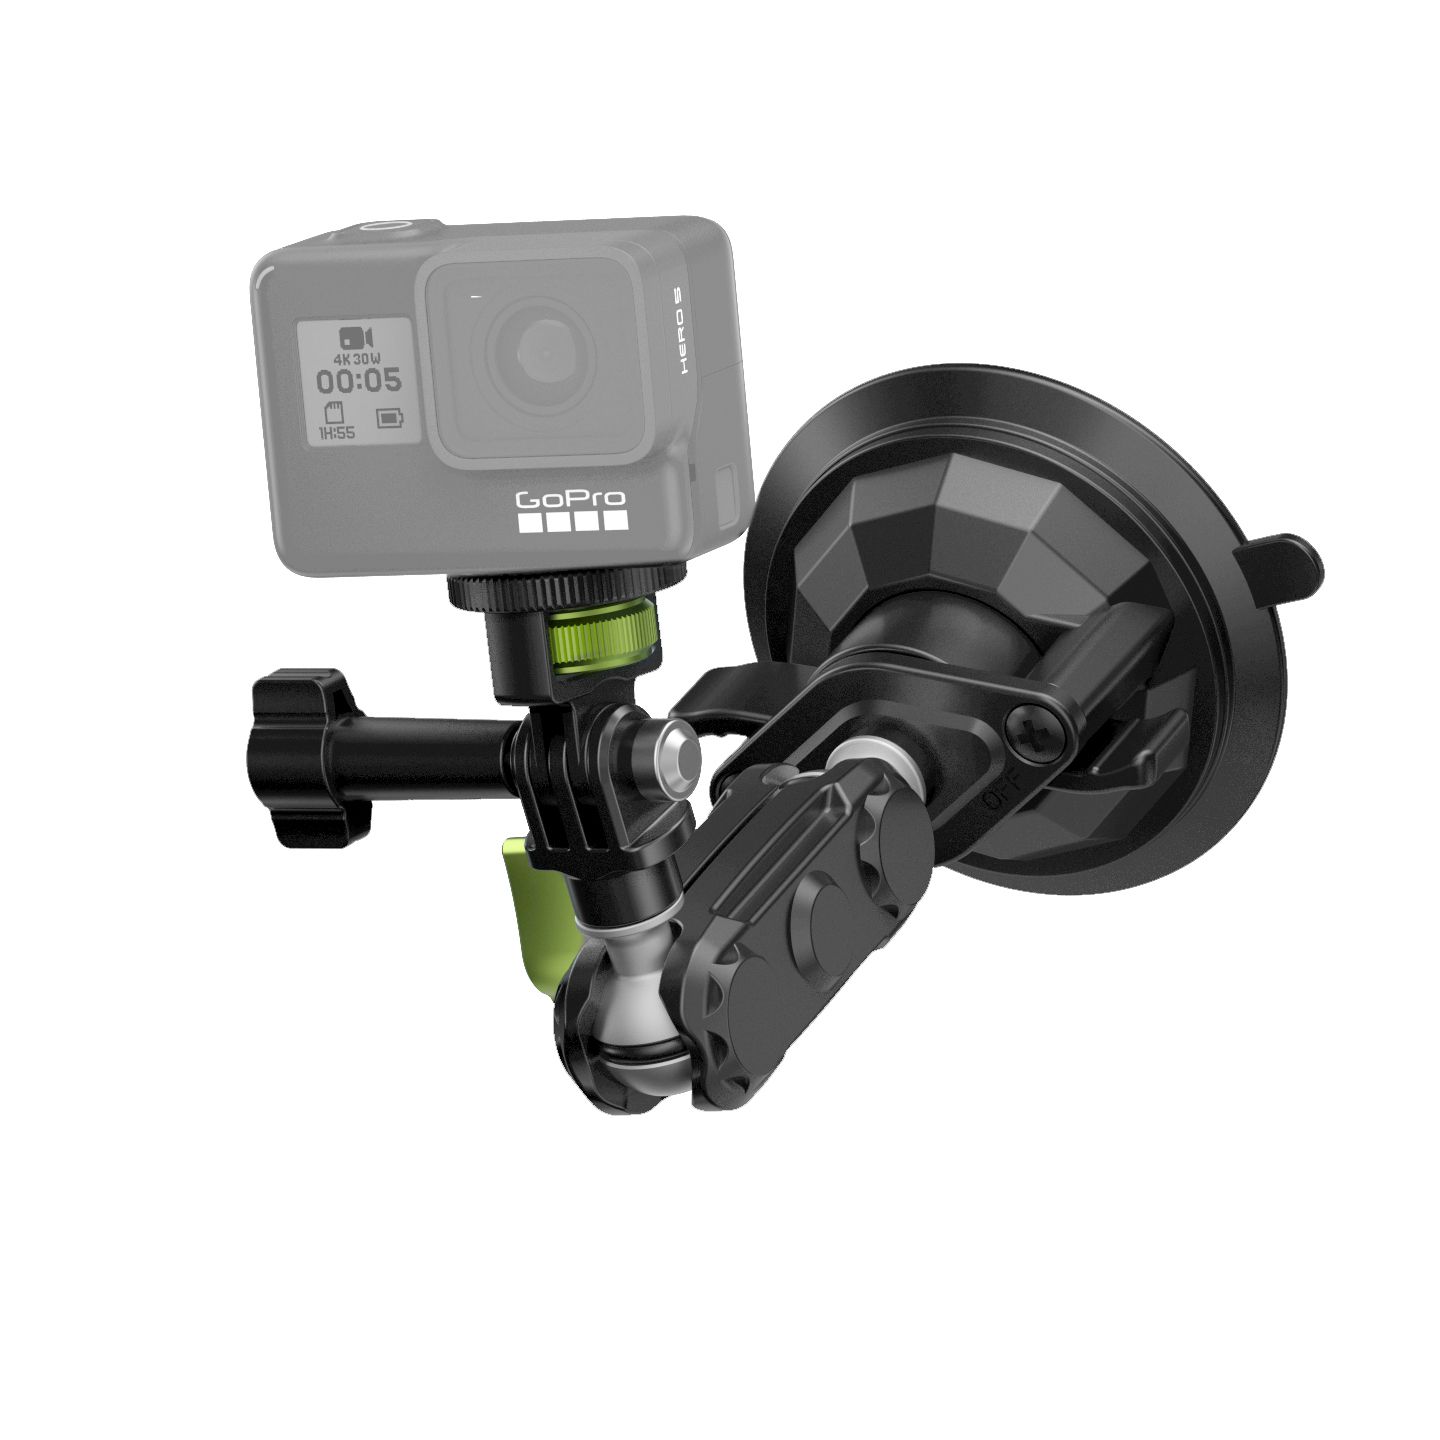 GoPro 3 Cup Action Kamera Sucker Mount Action Kamera Auto